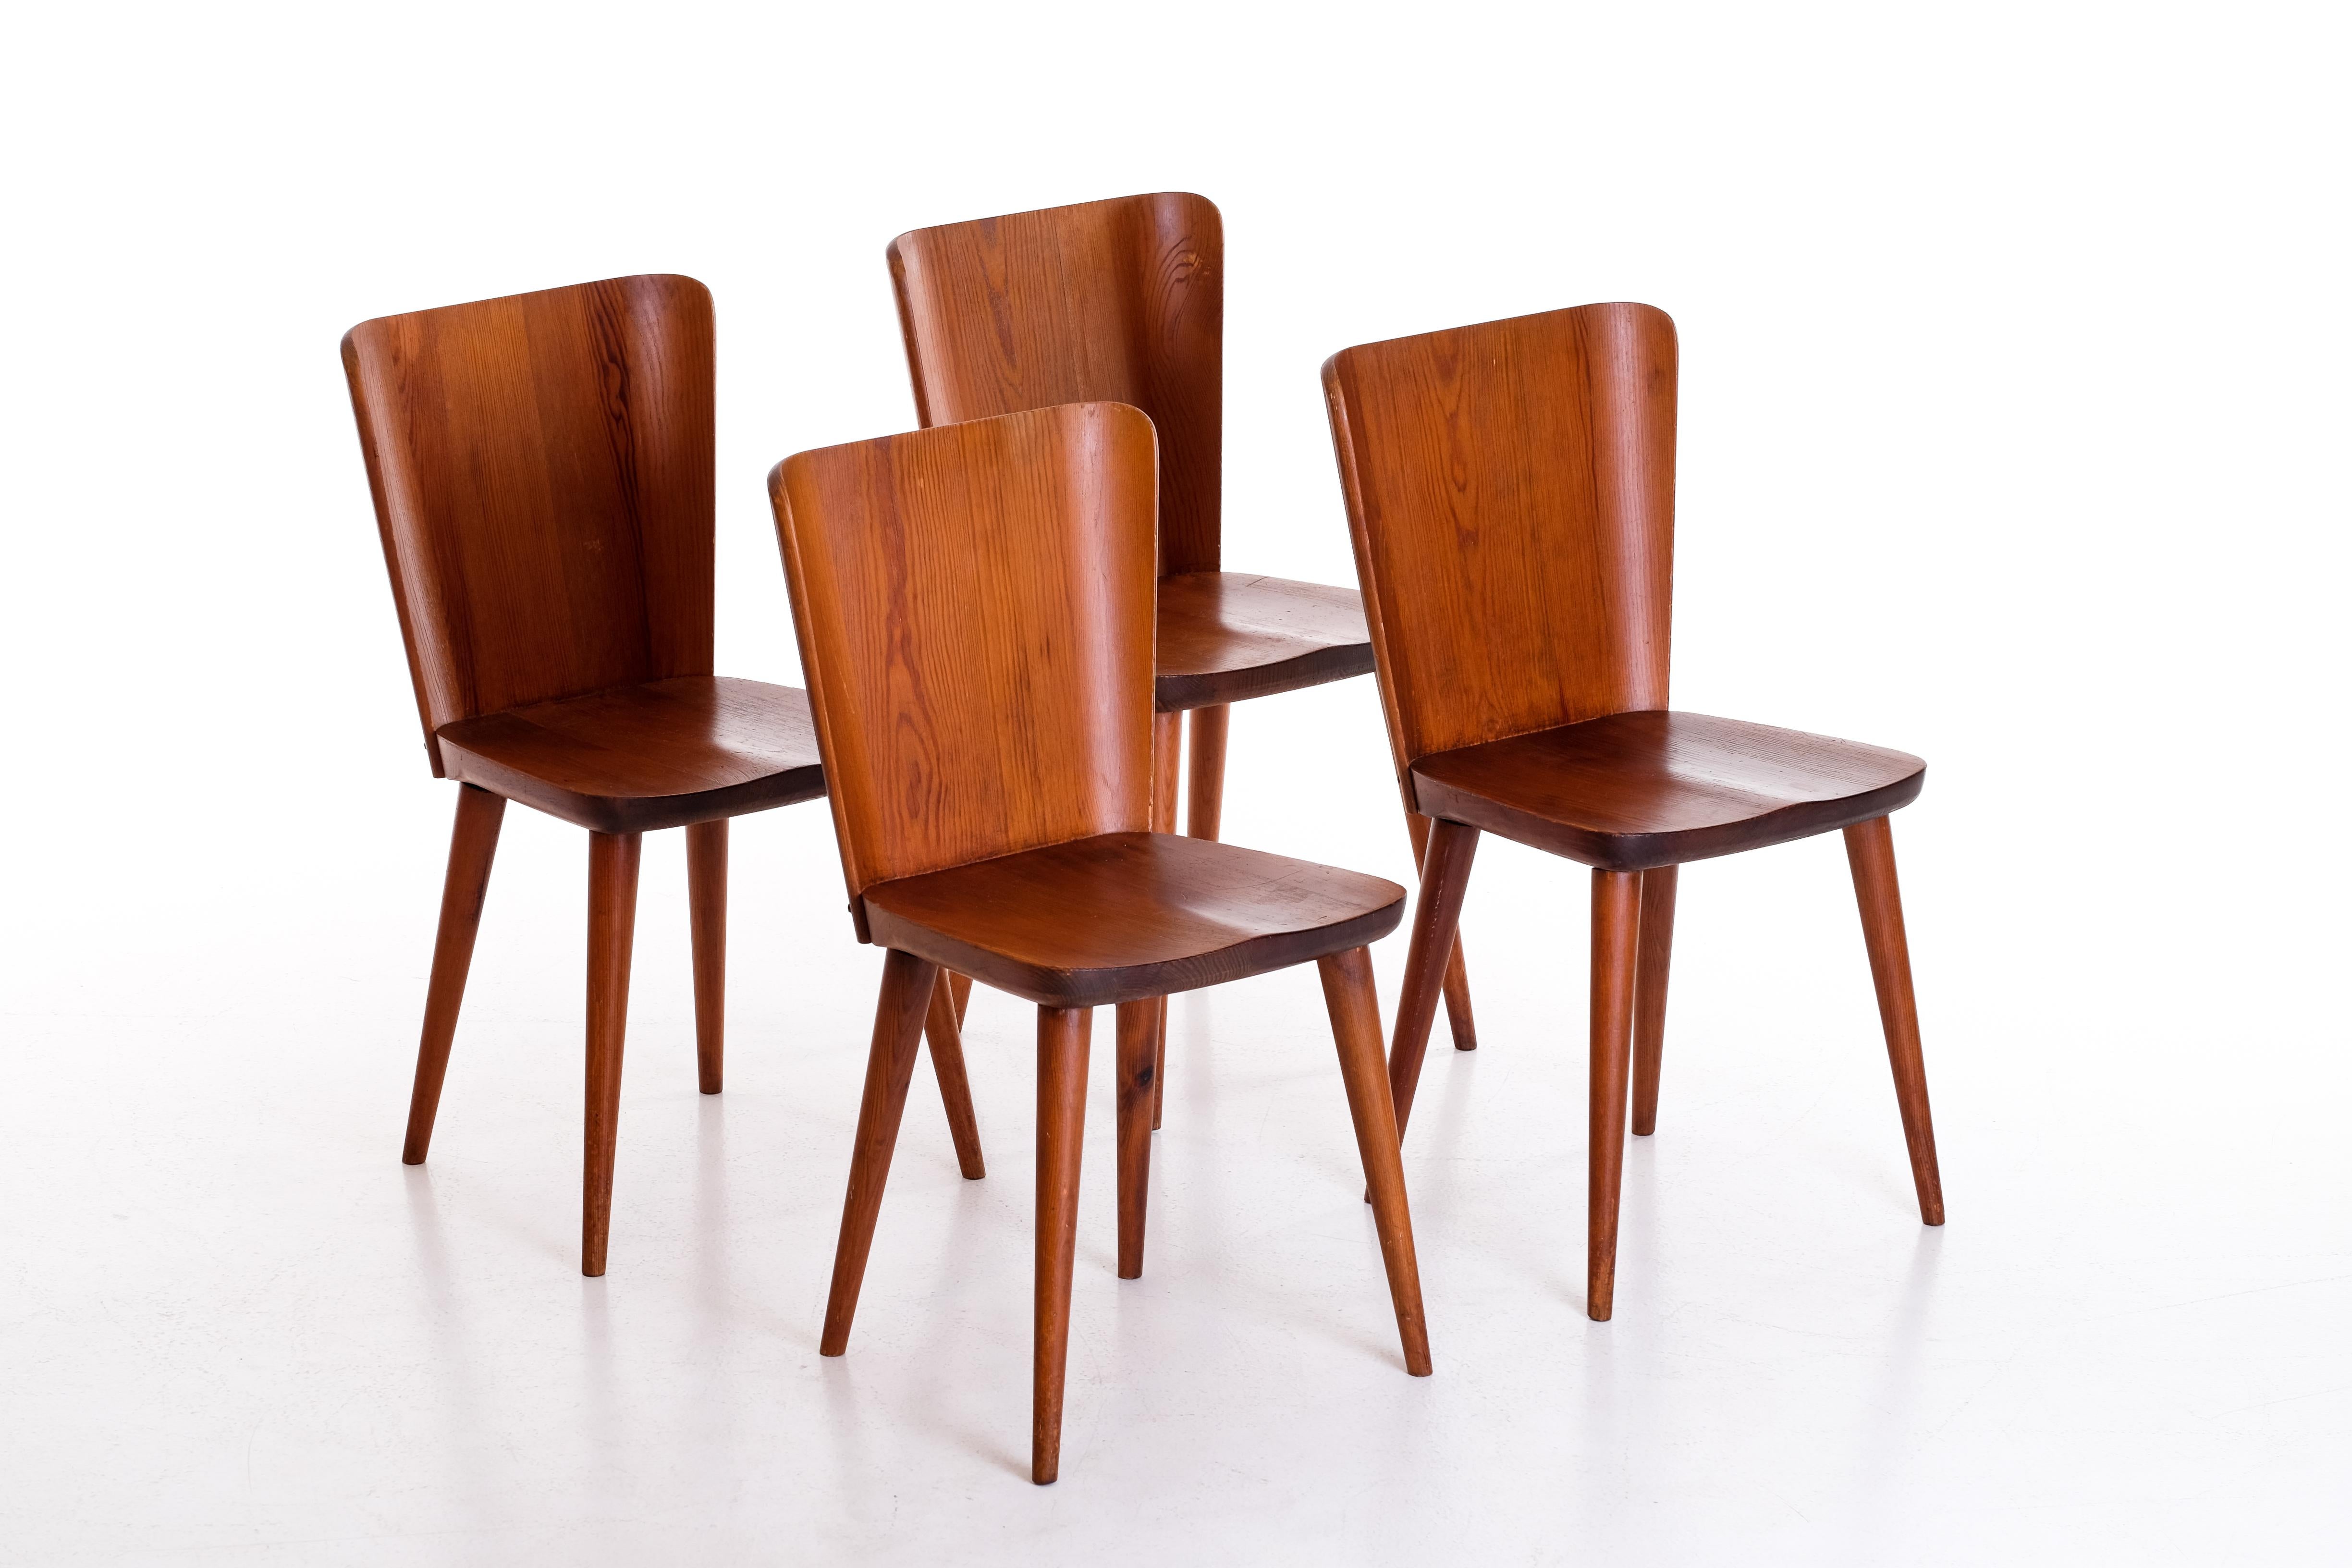 Set of 4 Swedish Pine Chairs by Göran Malmvall, Svensk Fur, 1960s For Sale 1